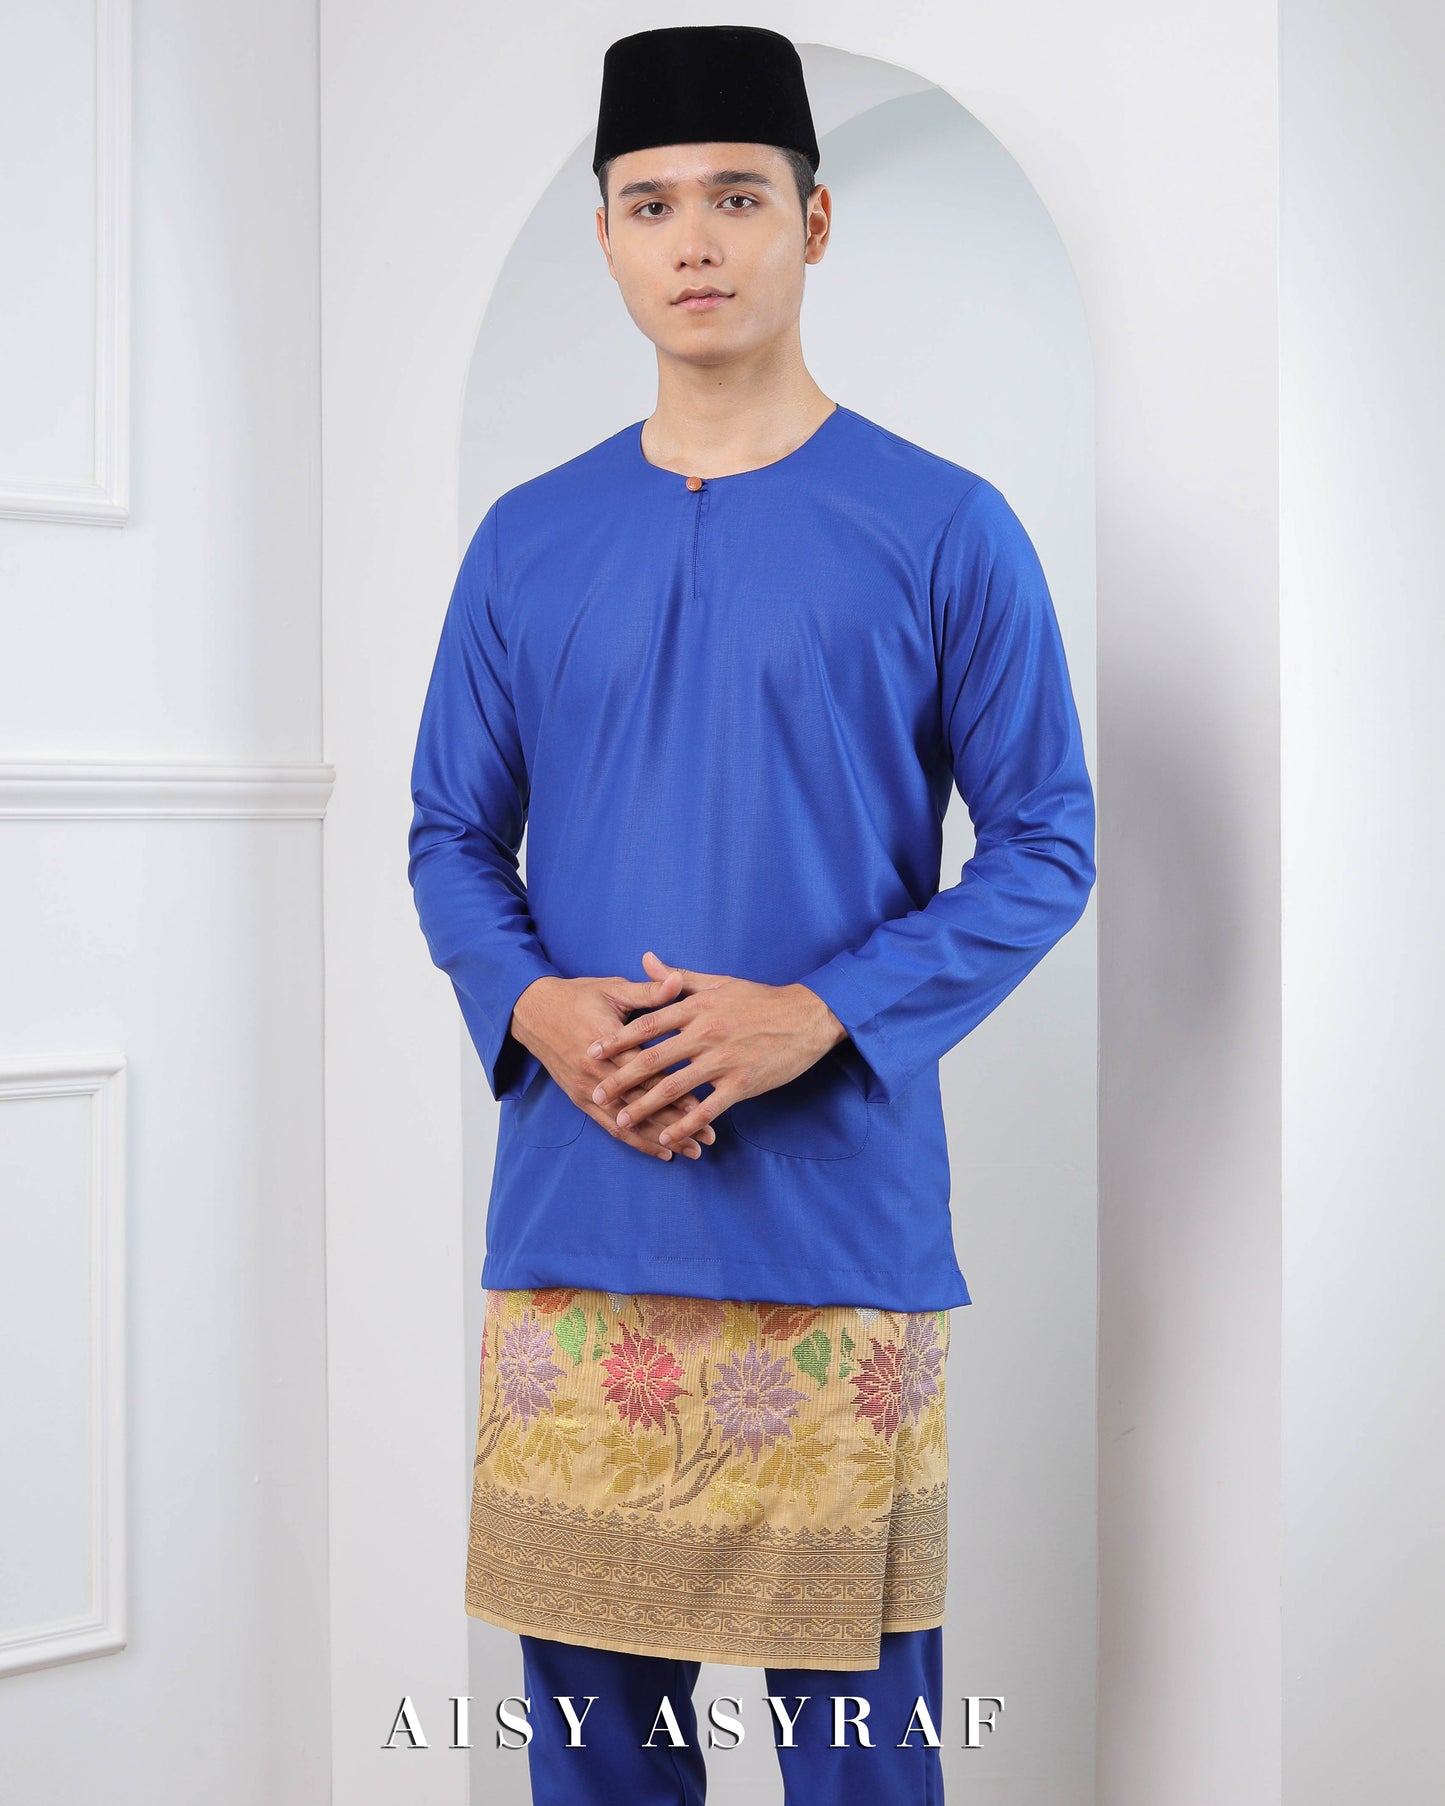 Baju Melayu Reyza -Royal Blue